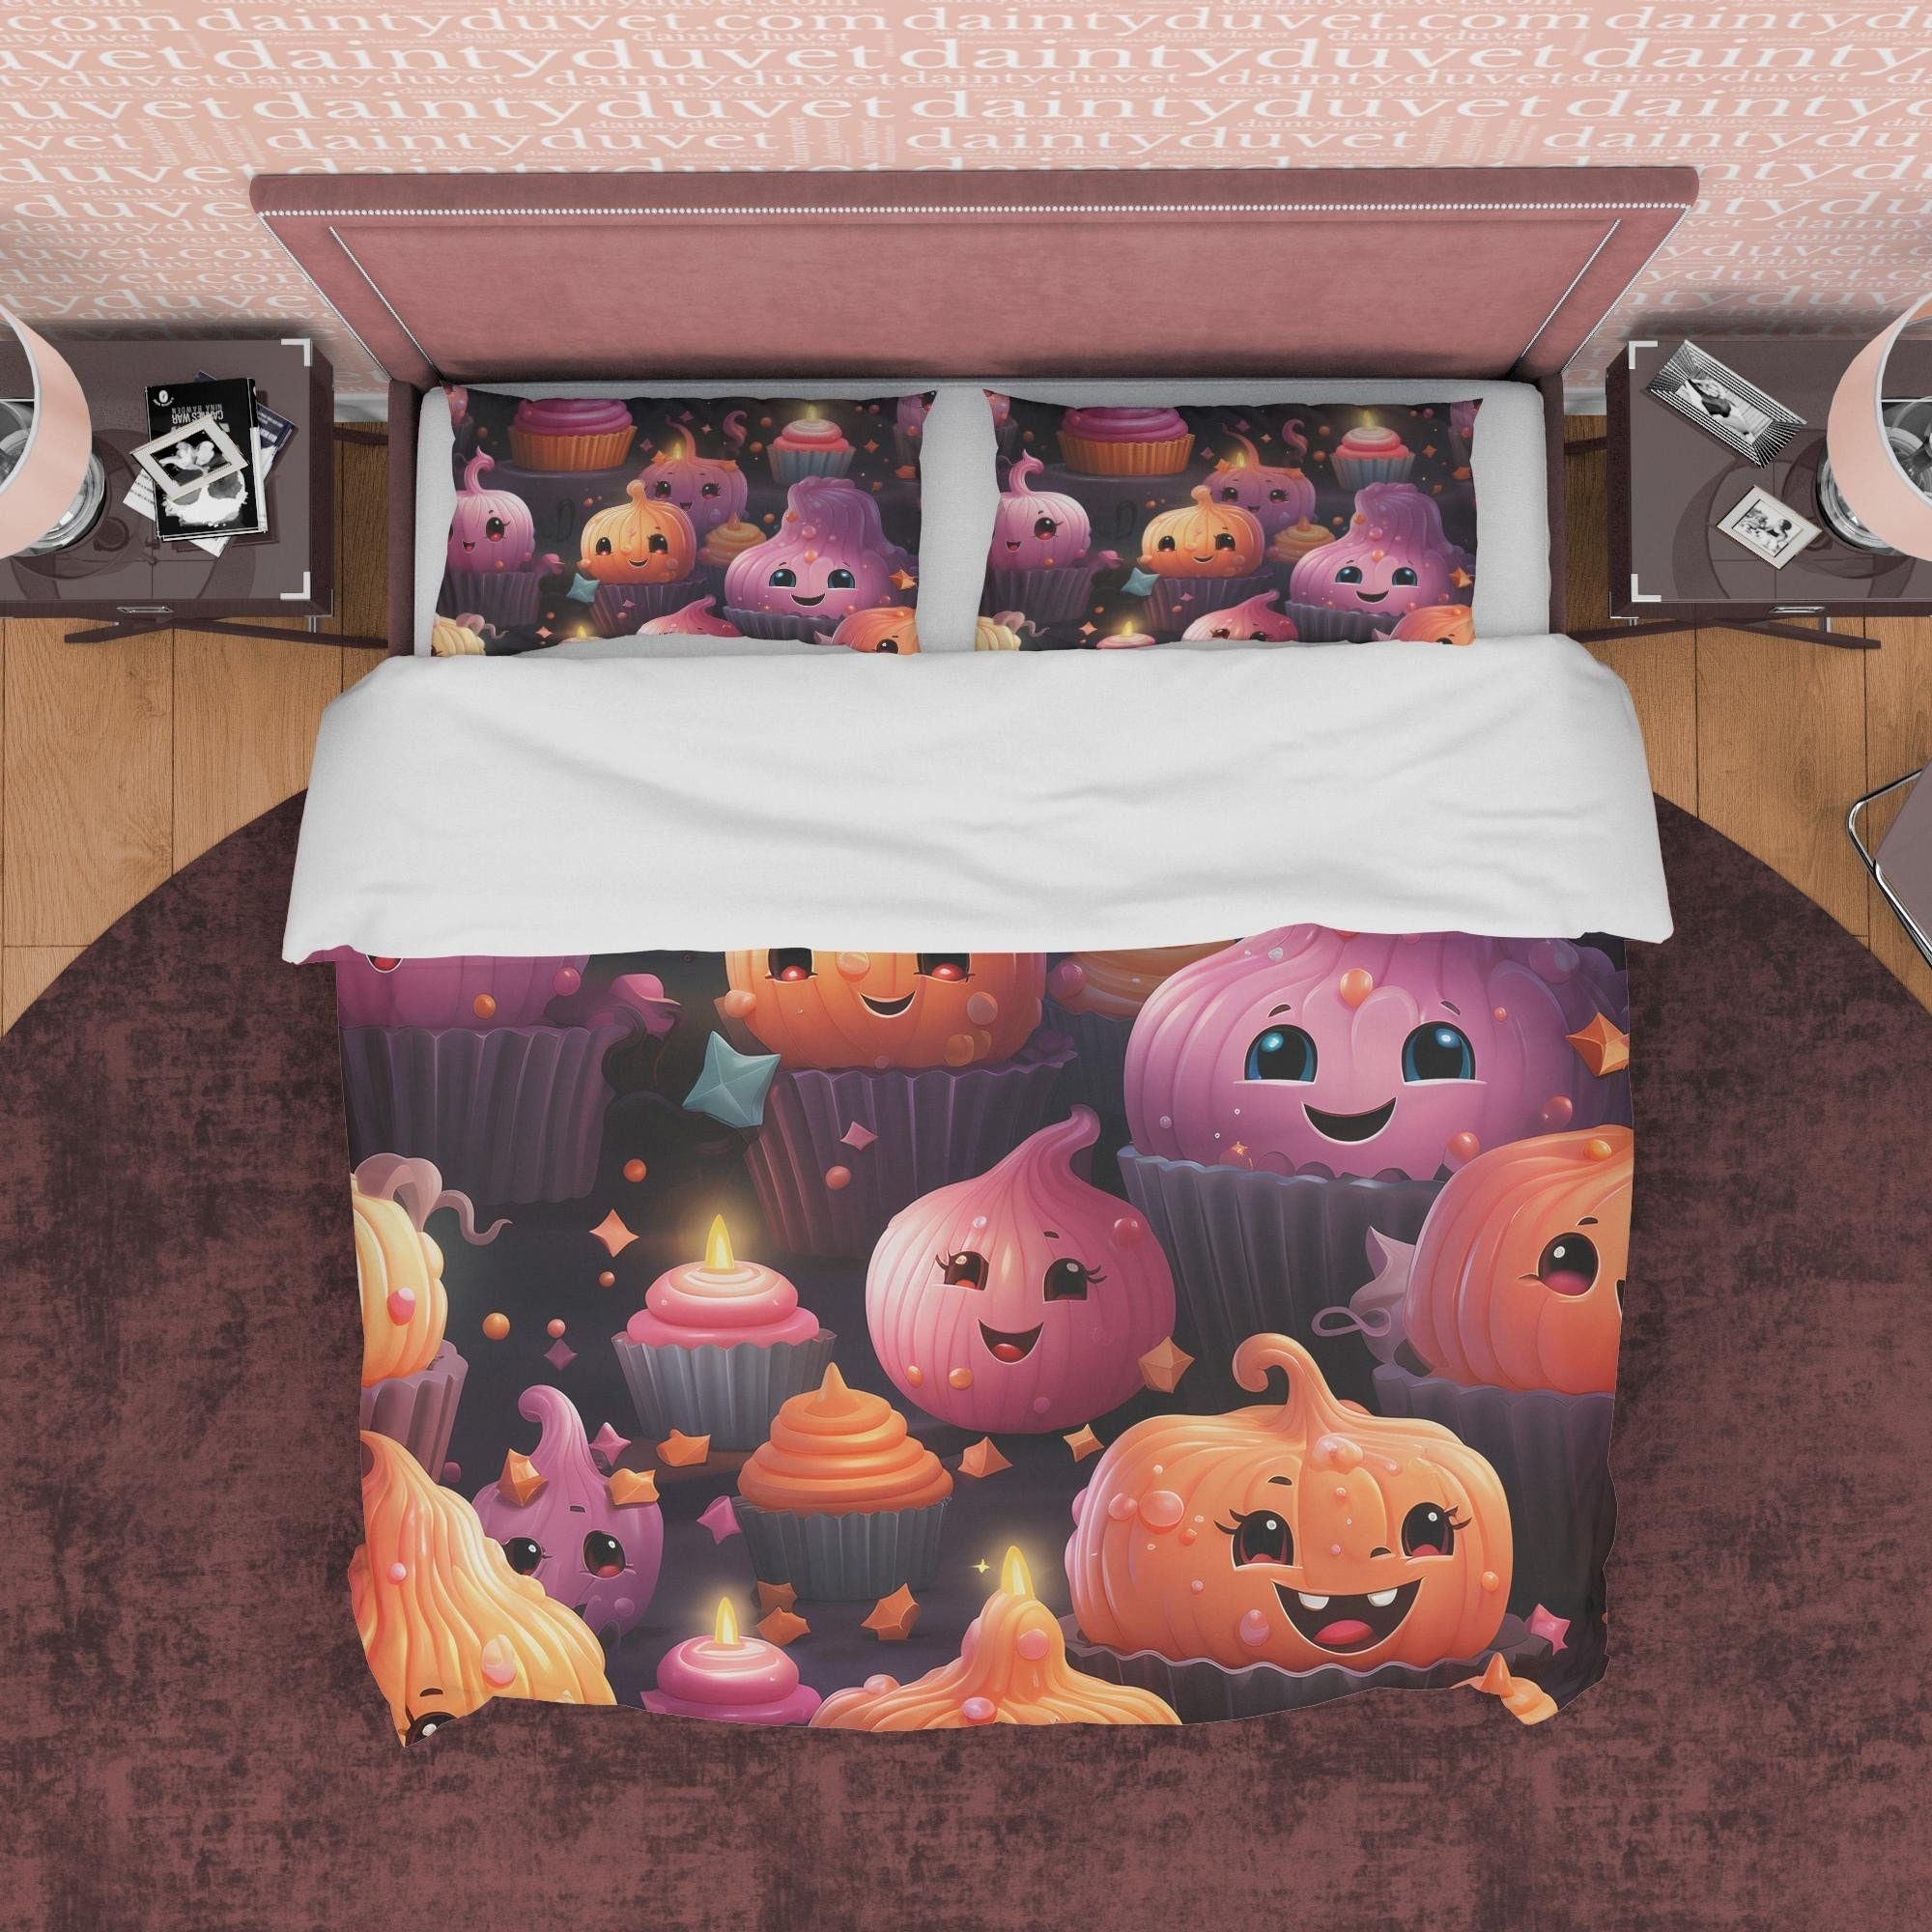 Pumpkin Onion & Cupcakes Duvet Cover Set Spooky Bedding, Cute Halloween Room Decor, Kids Bedspread, Zipper Quilt Cover, Aesthetic Bed Cover